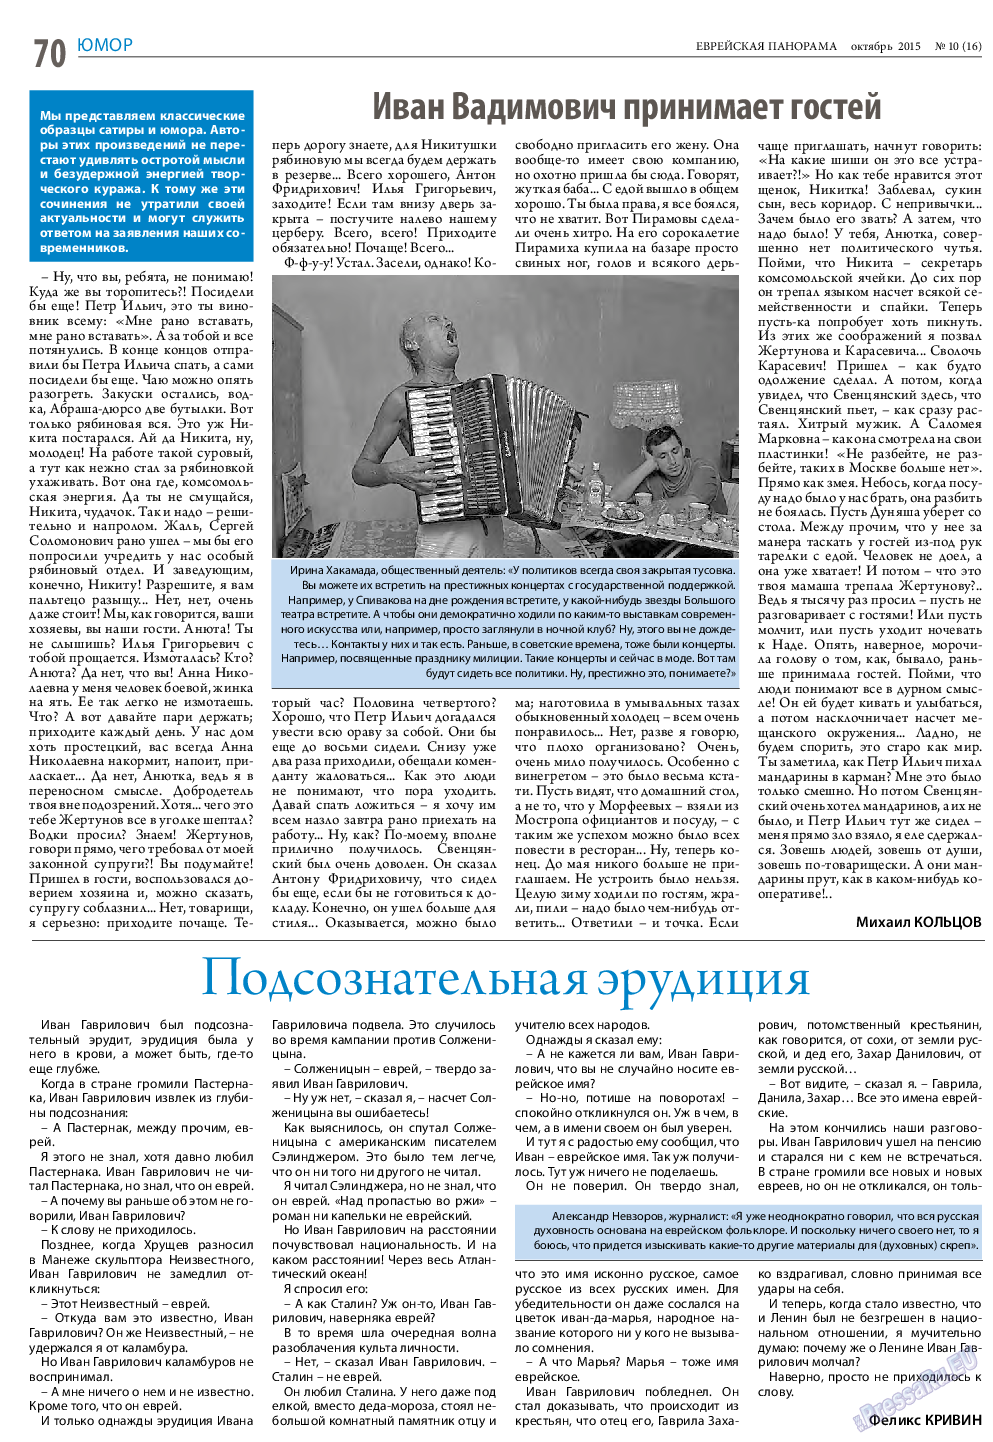 Еврейская панорама, газета. 2015 №10 стр.70